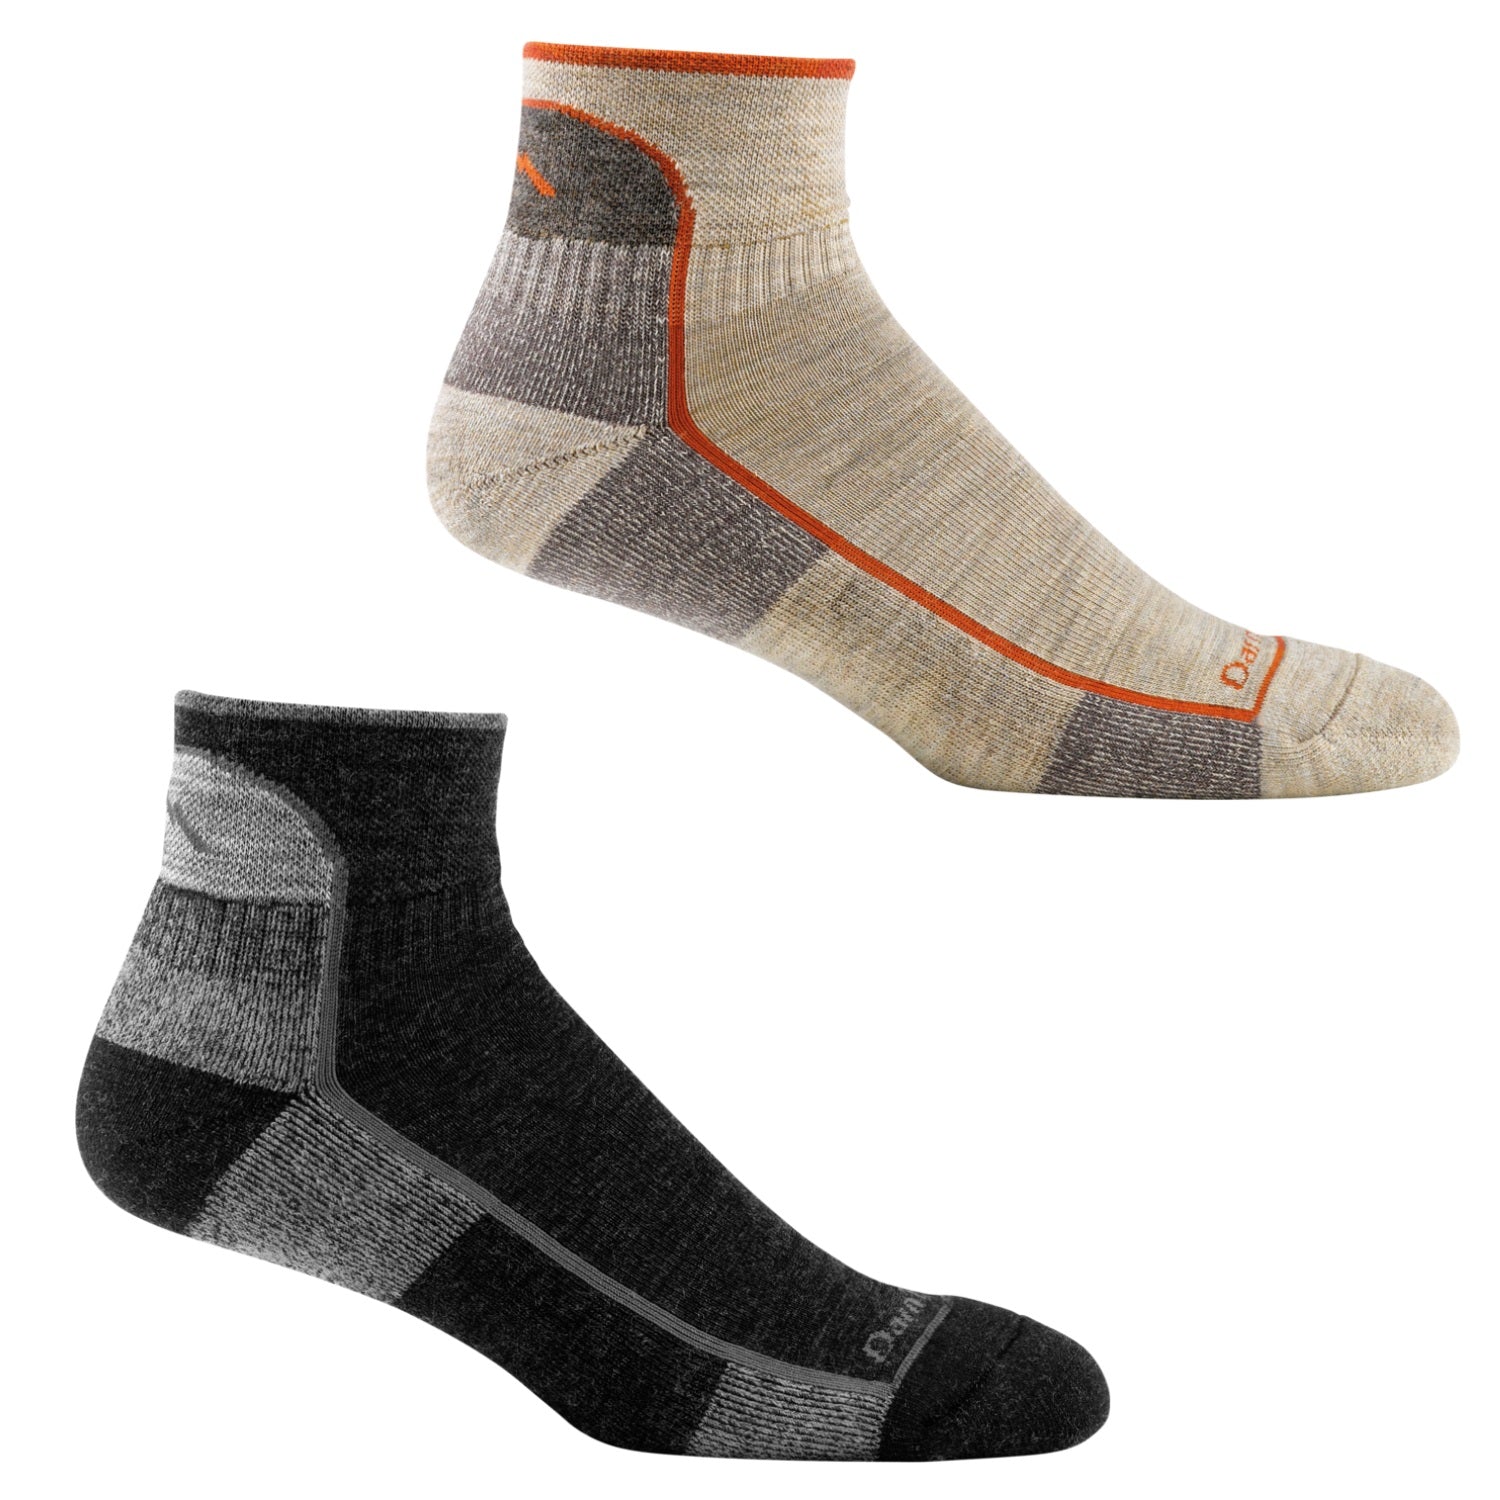 Darn Tough 1/4 - Merino Wool Cushioned Sock - Men's